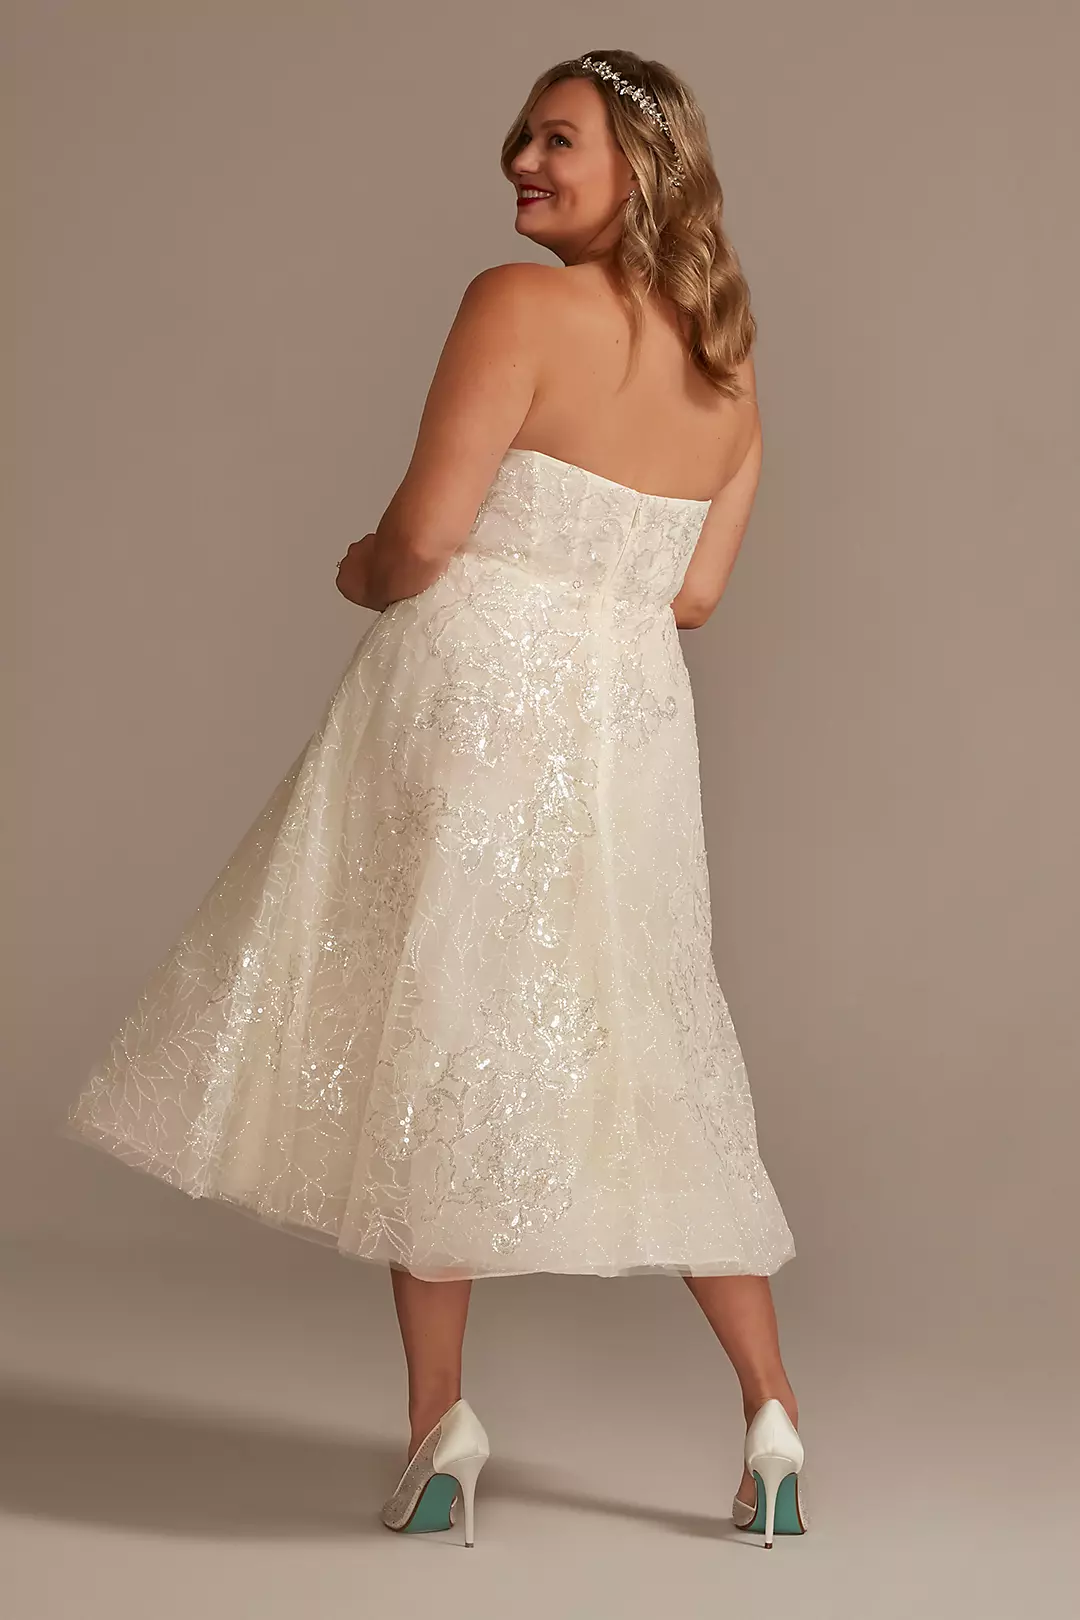 Floral Glitter Tulle Tea-Length Wedding Dress Image 2